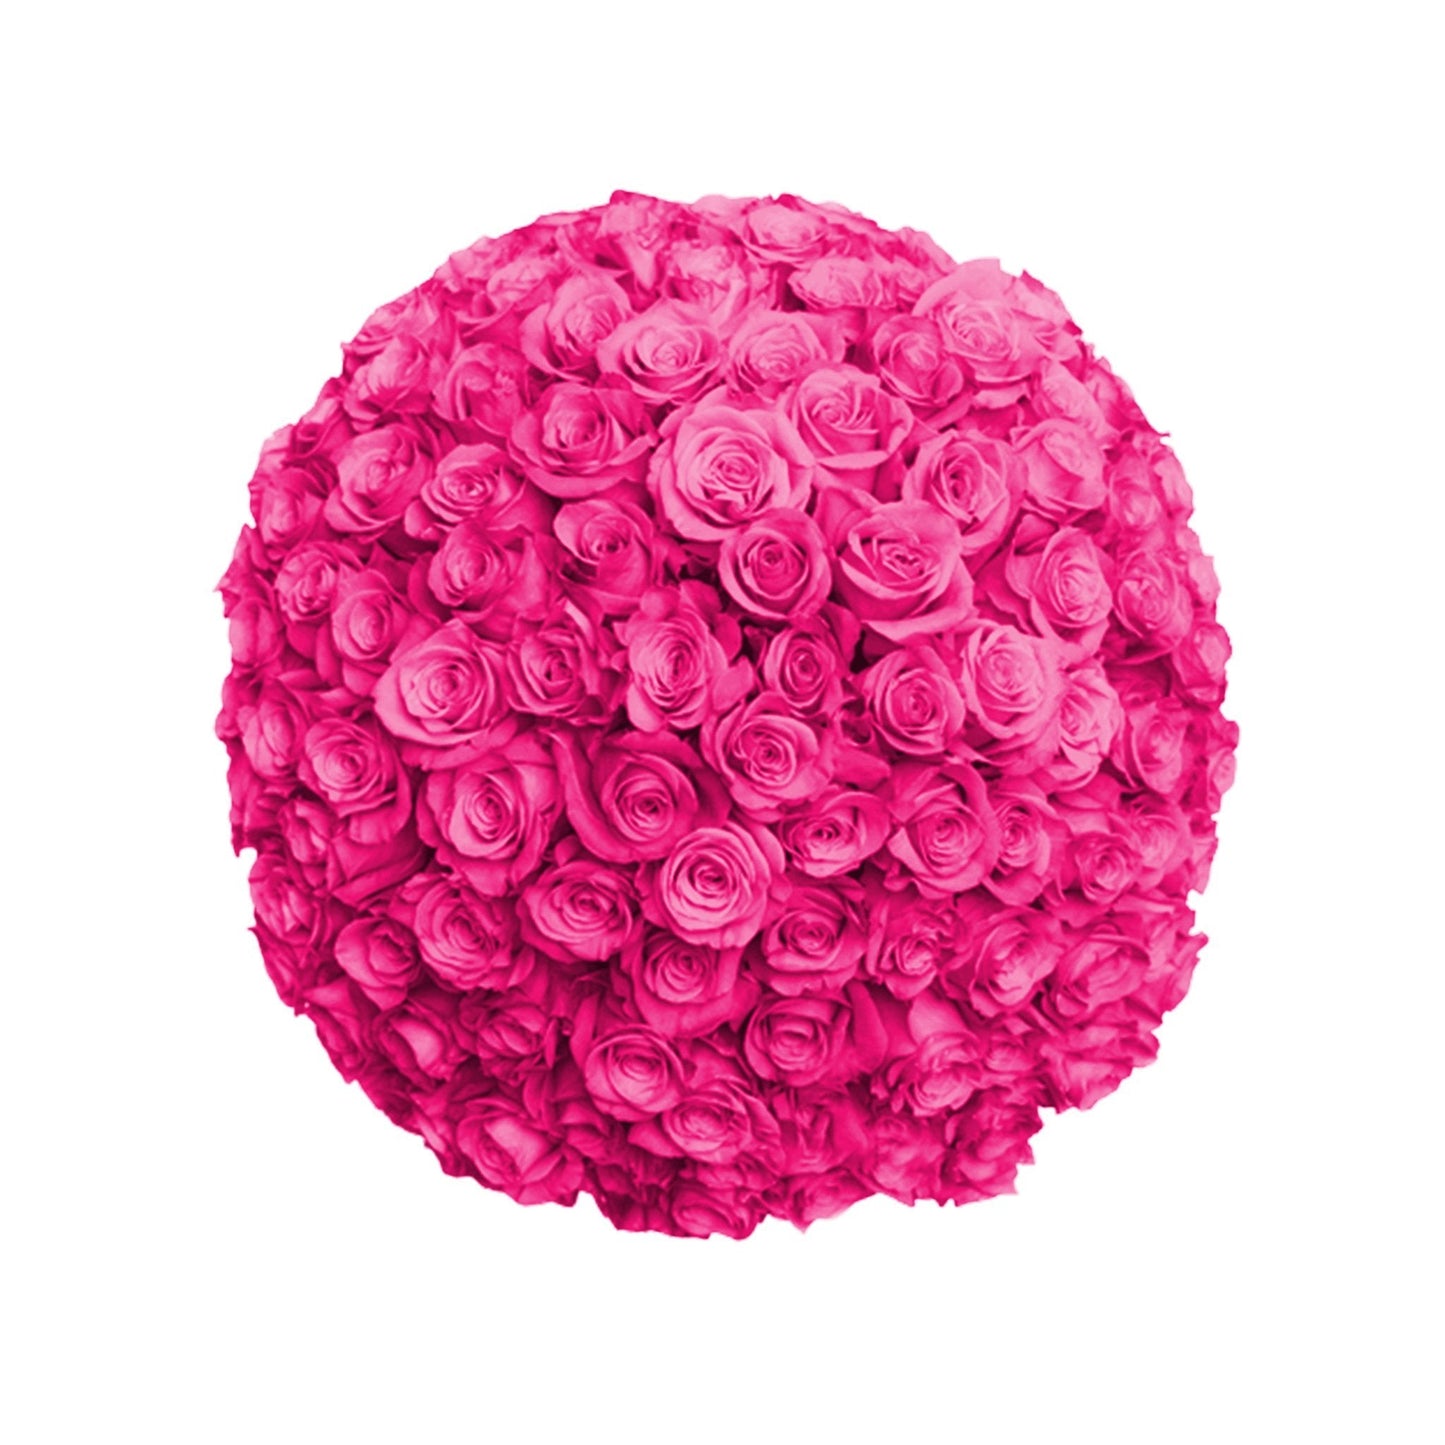 Fresh Roses in a Vase | 100 Hot Pink Roses - Floral_Arrangement - Flower Delivery NYC